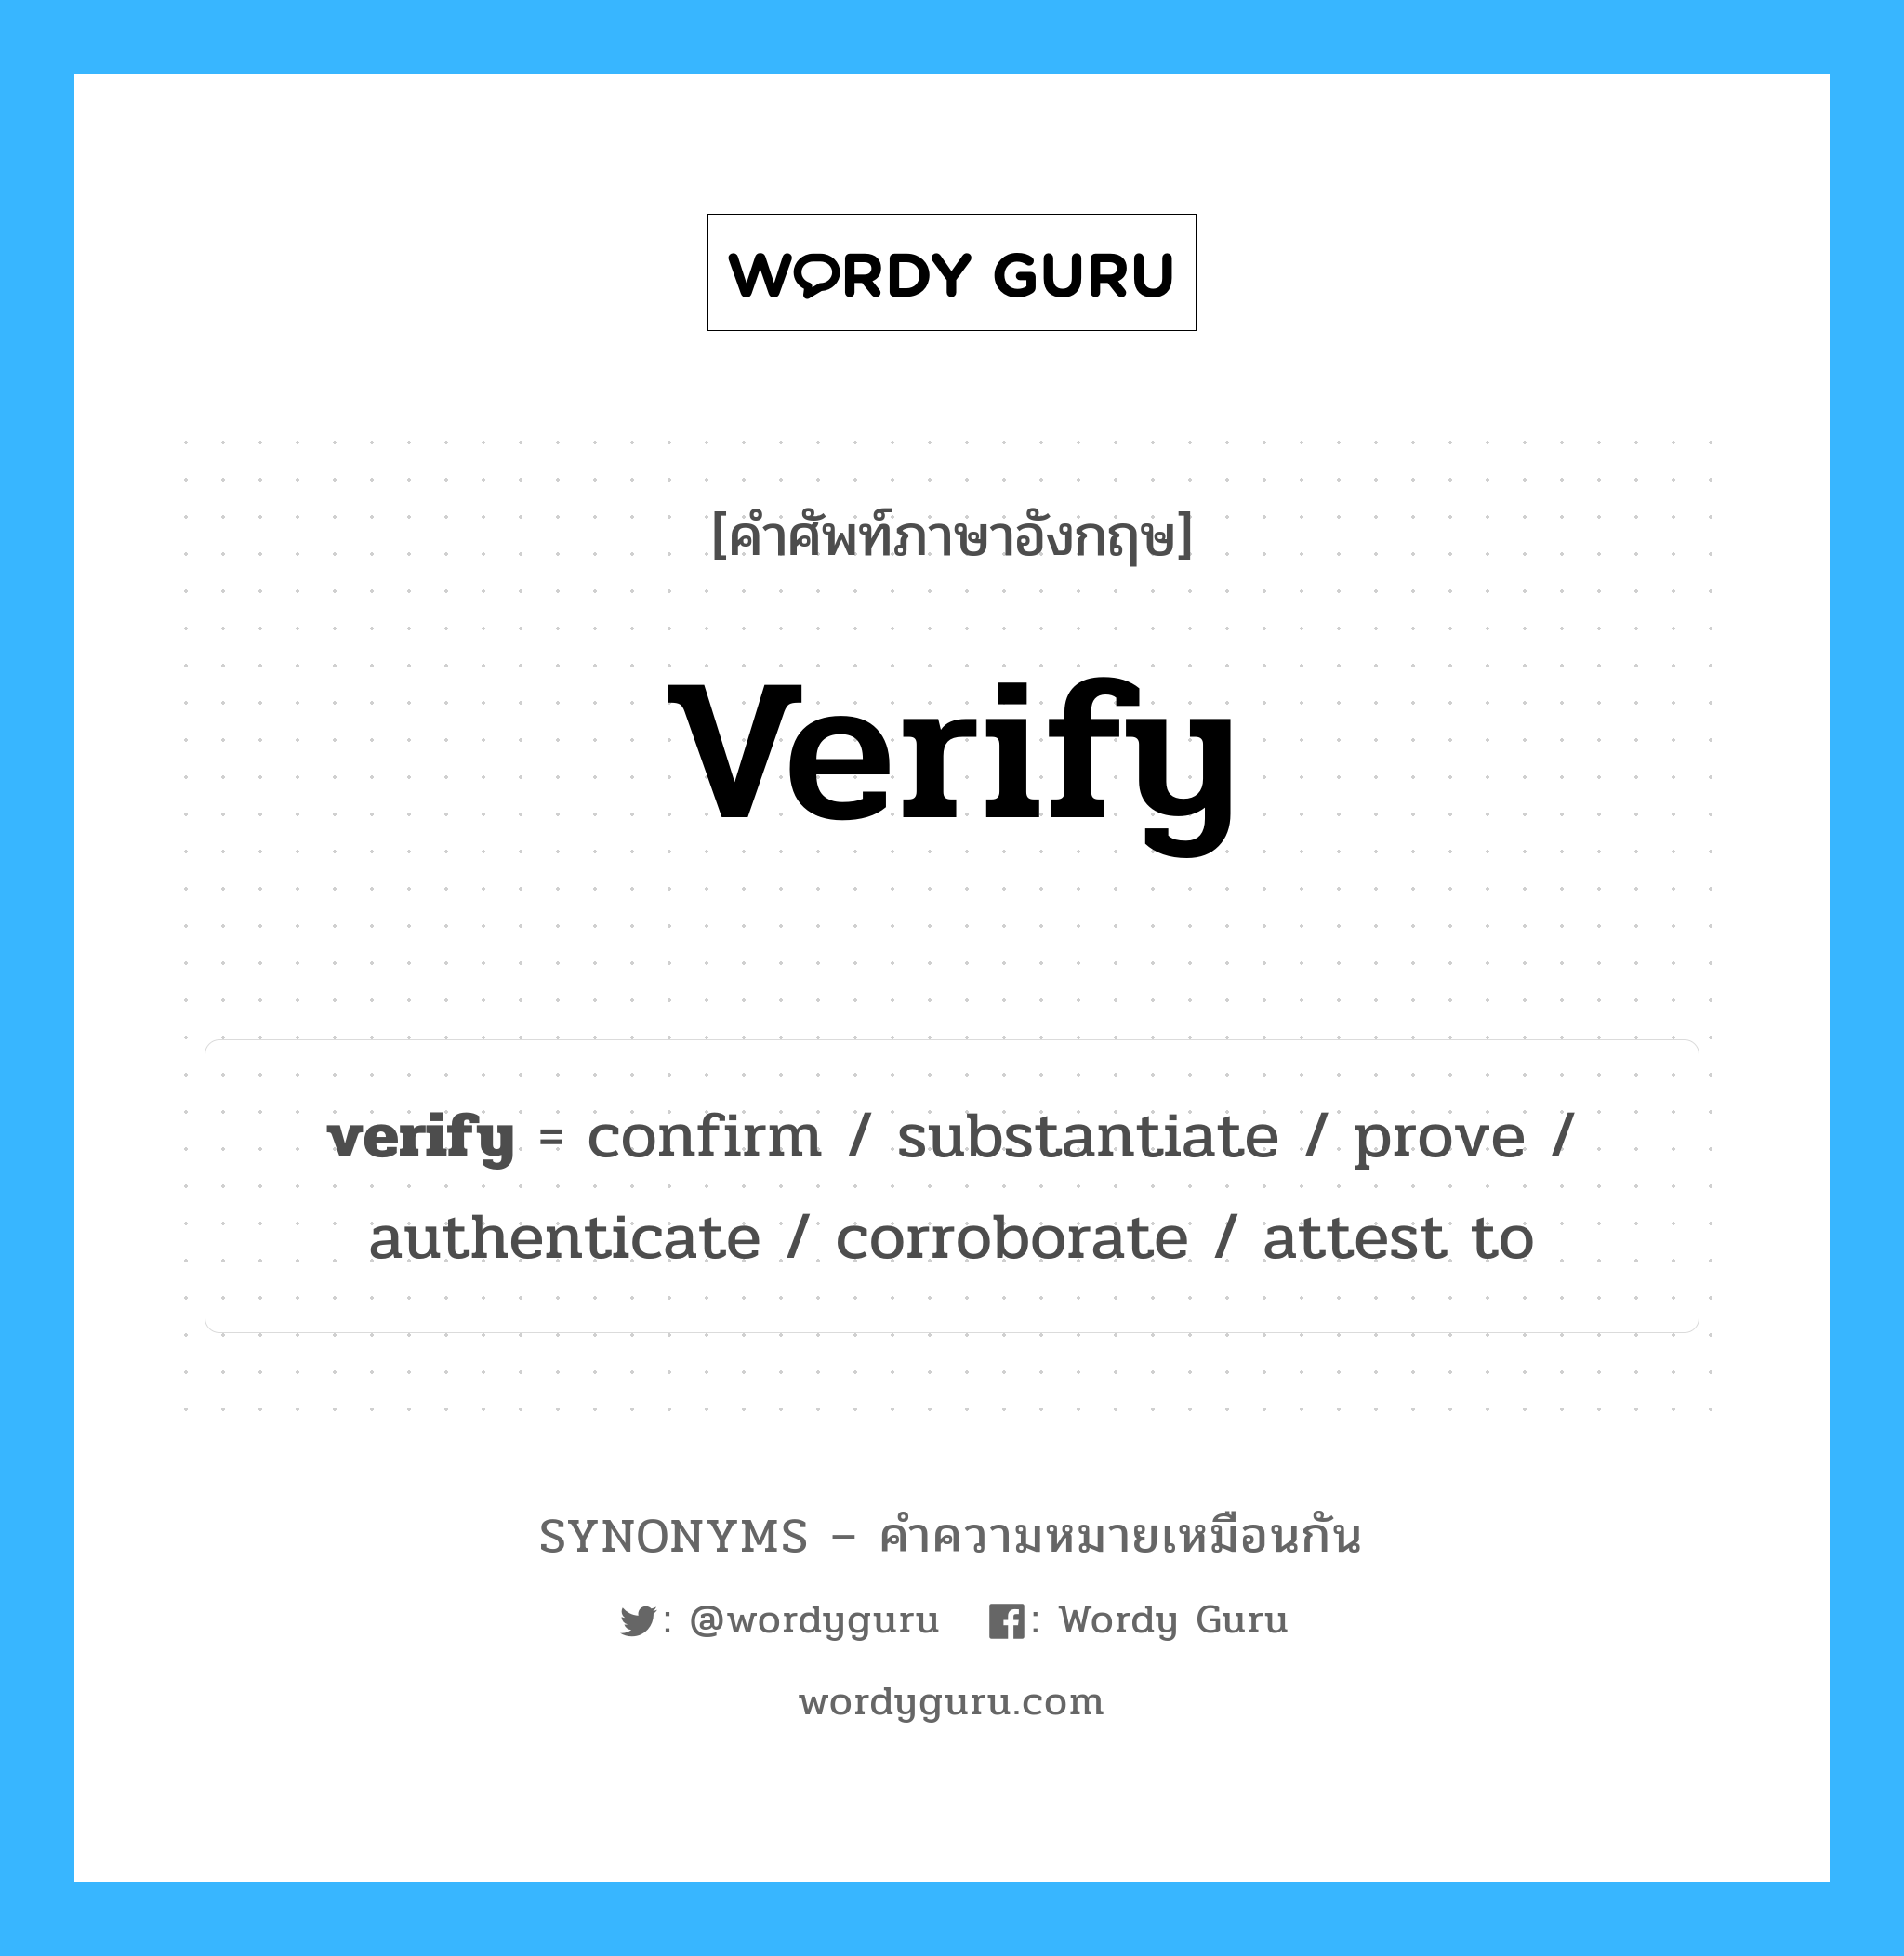 corroborate เป็นหนึ่งใน verify และมีคำอื่น ๆ อีกดังนี้, คำศัพท์ภาษาอังกฤษ corroborate ความหมายคล้ายกันกับ verify แปลว่า corroborate หมวด verify